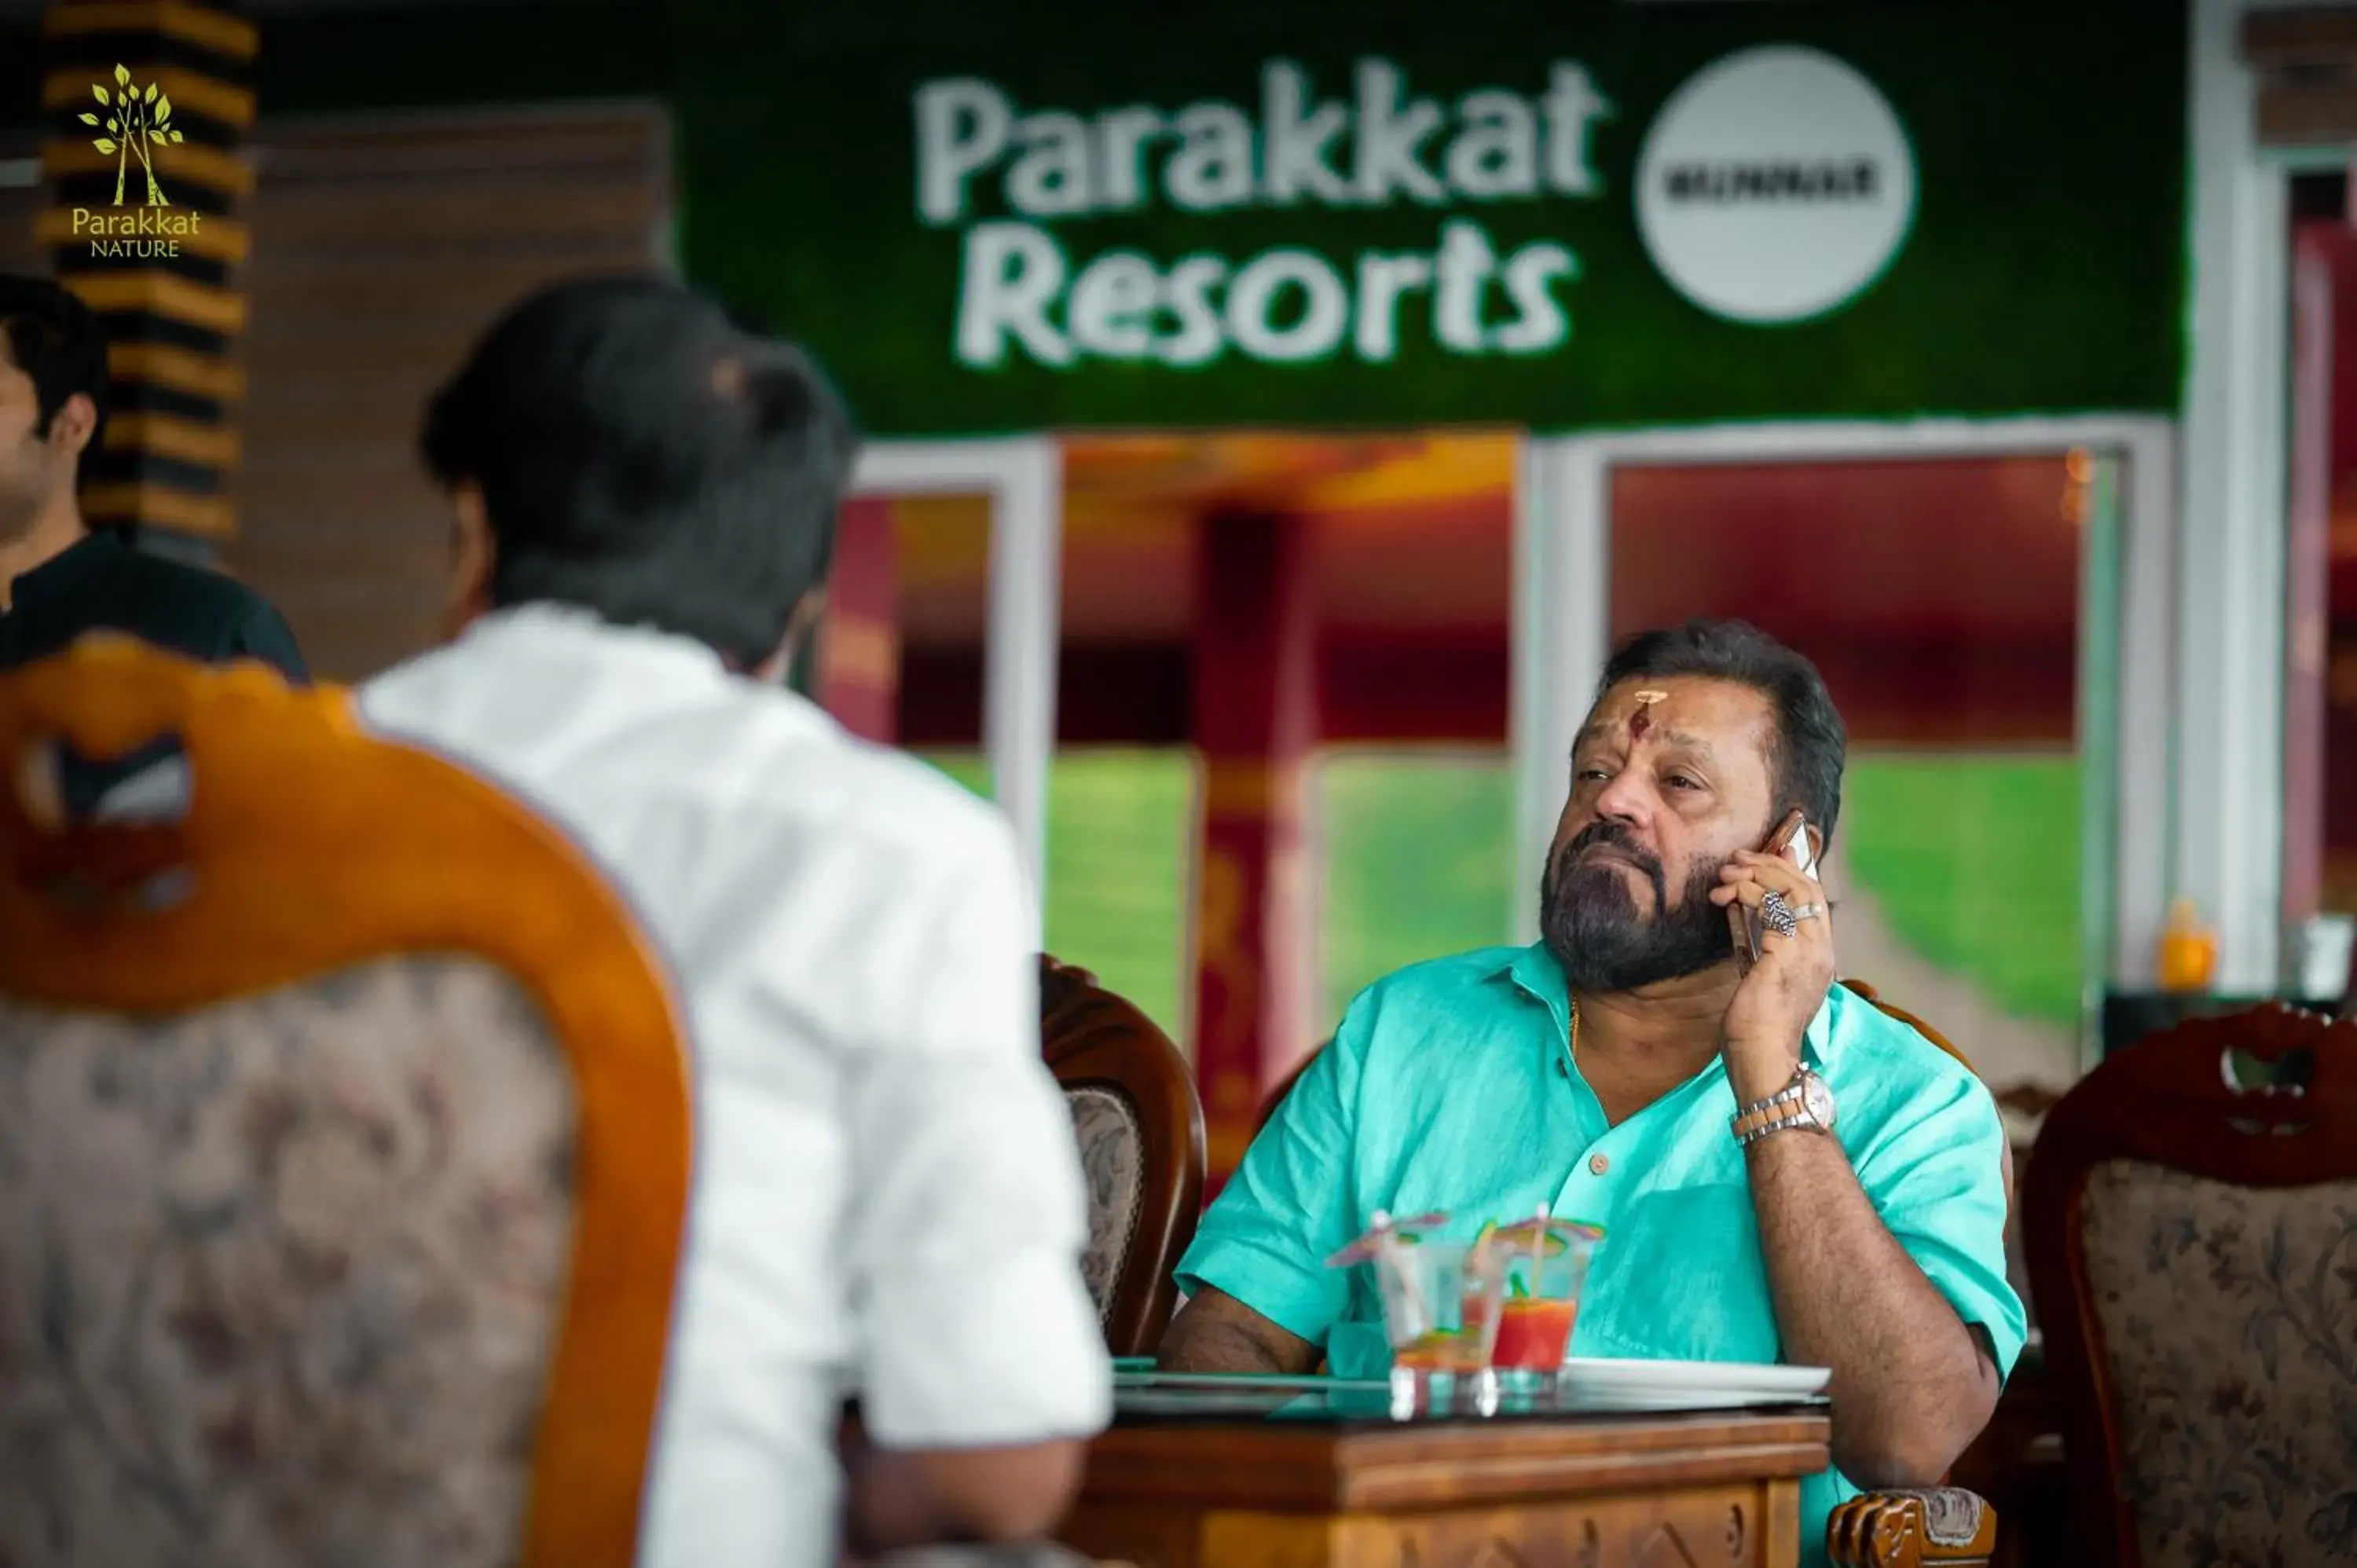 Restaurant/places to eat in Parakkat Nature Resort